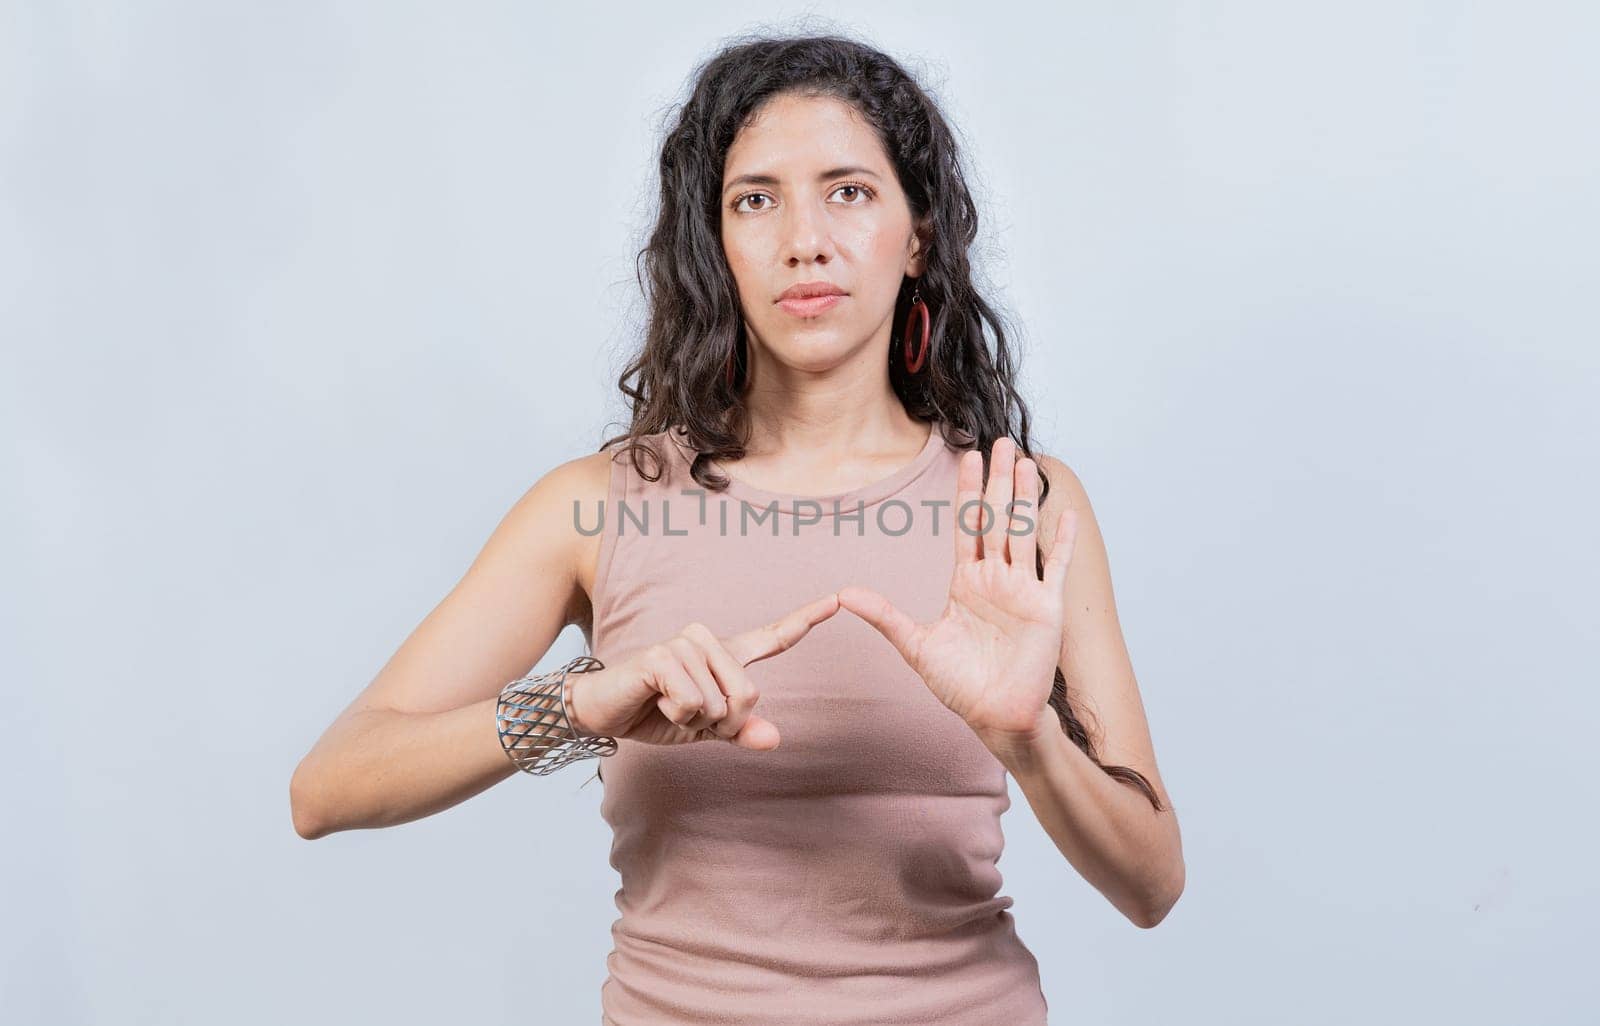 Lating girl gesturing in sign language isolated. Young woman gesturing in sign language, People speaking in sign language isolated by isaiphoto